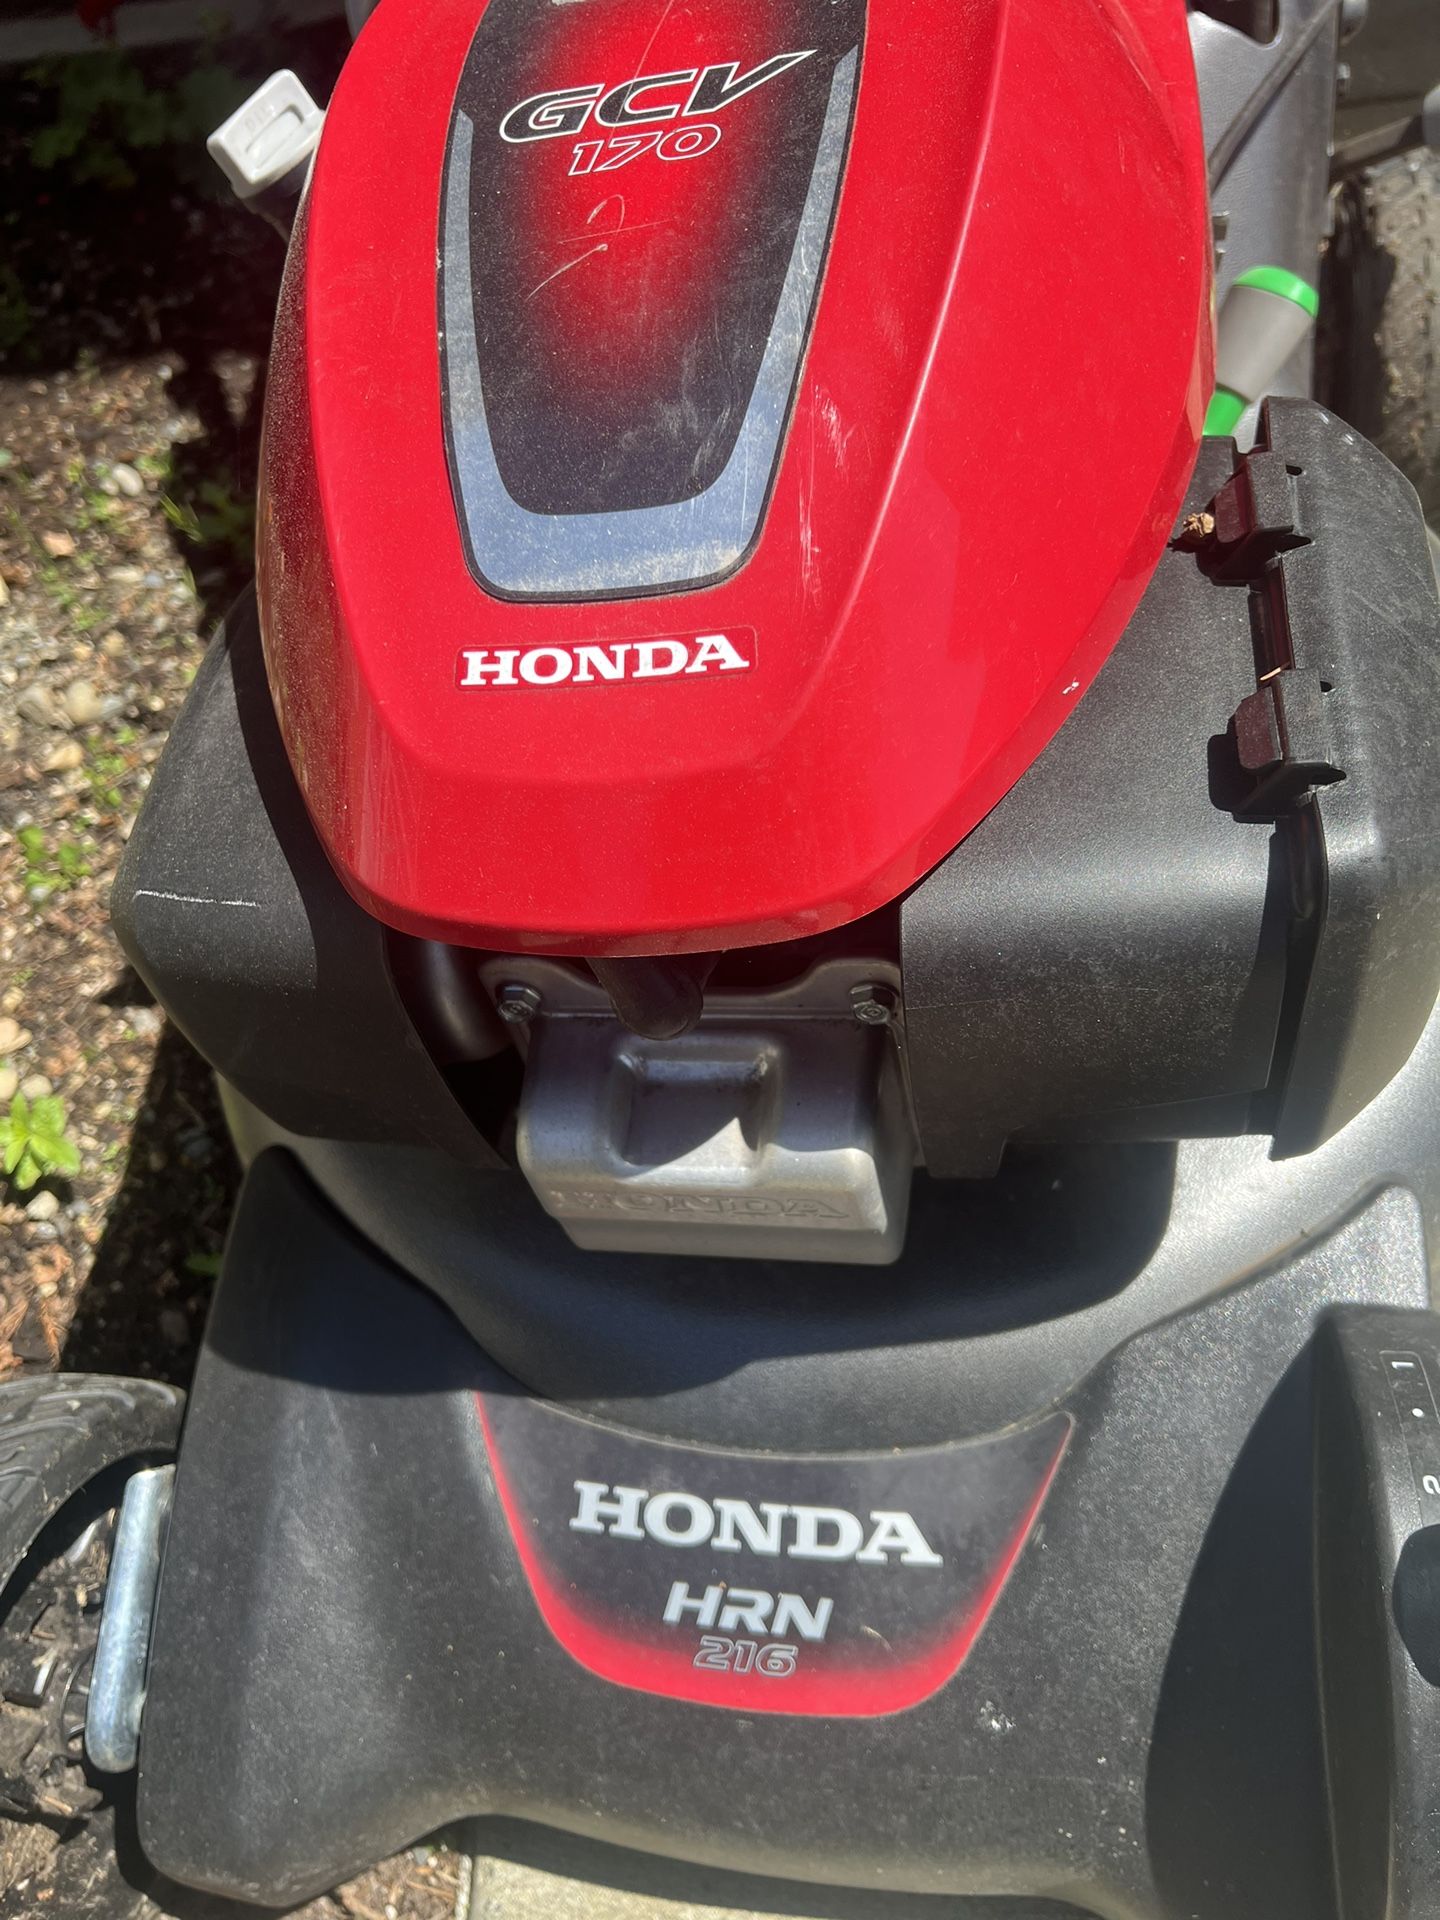 Honda Lenmore